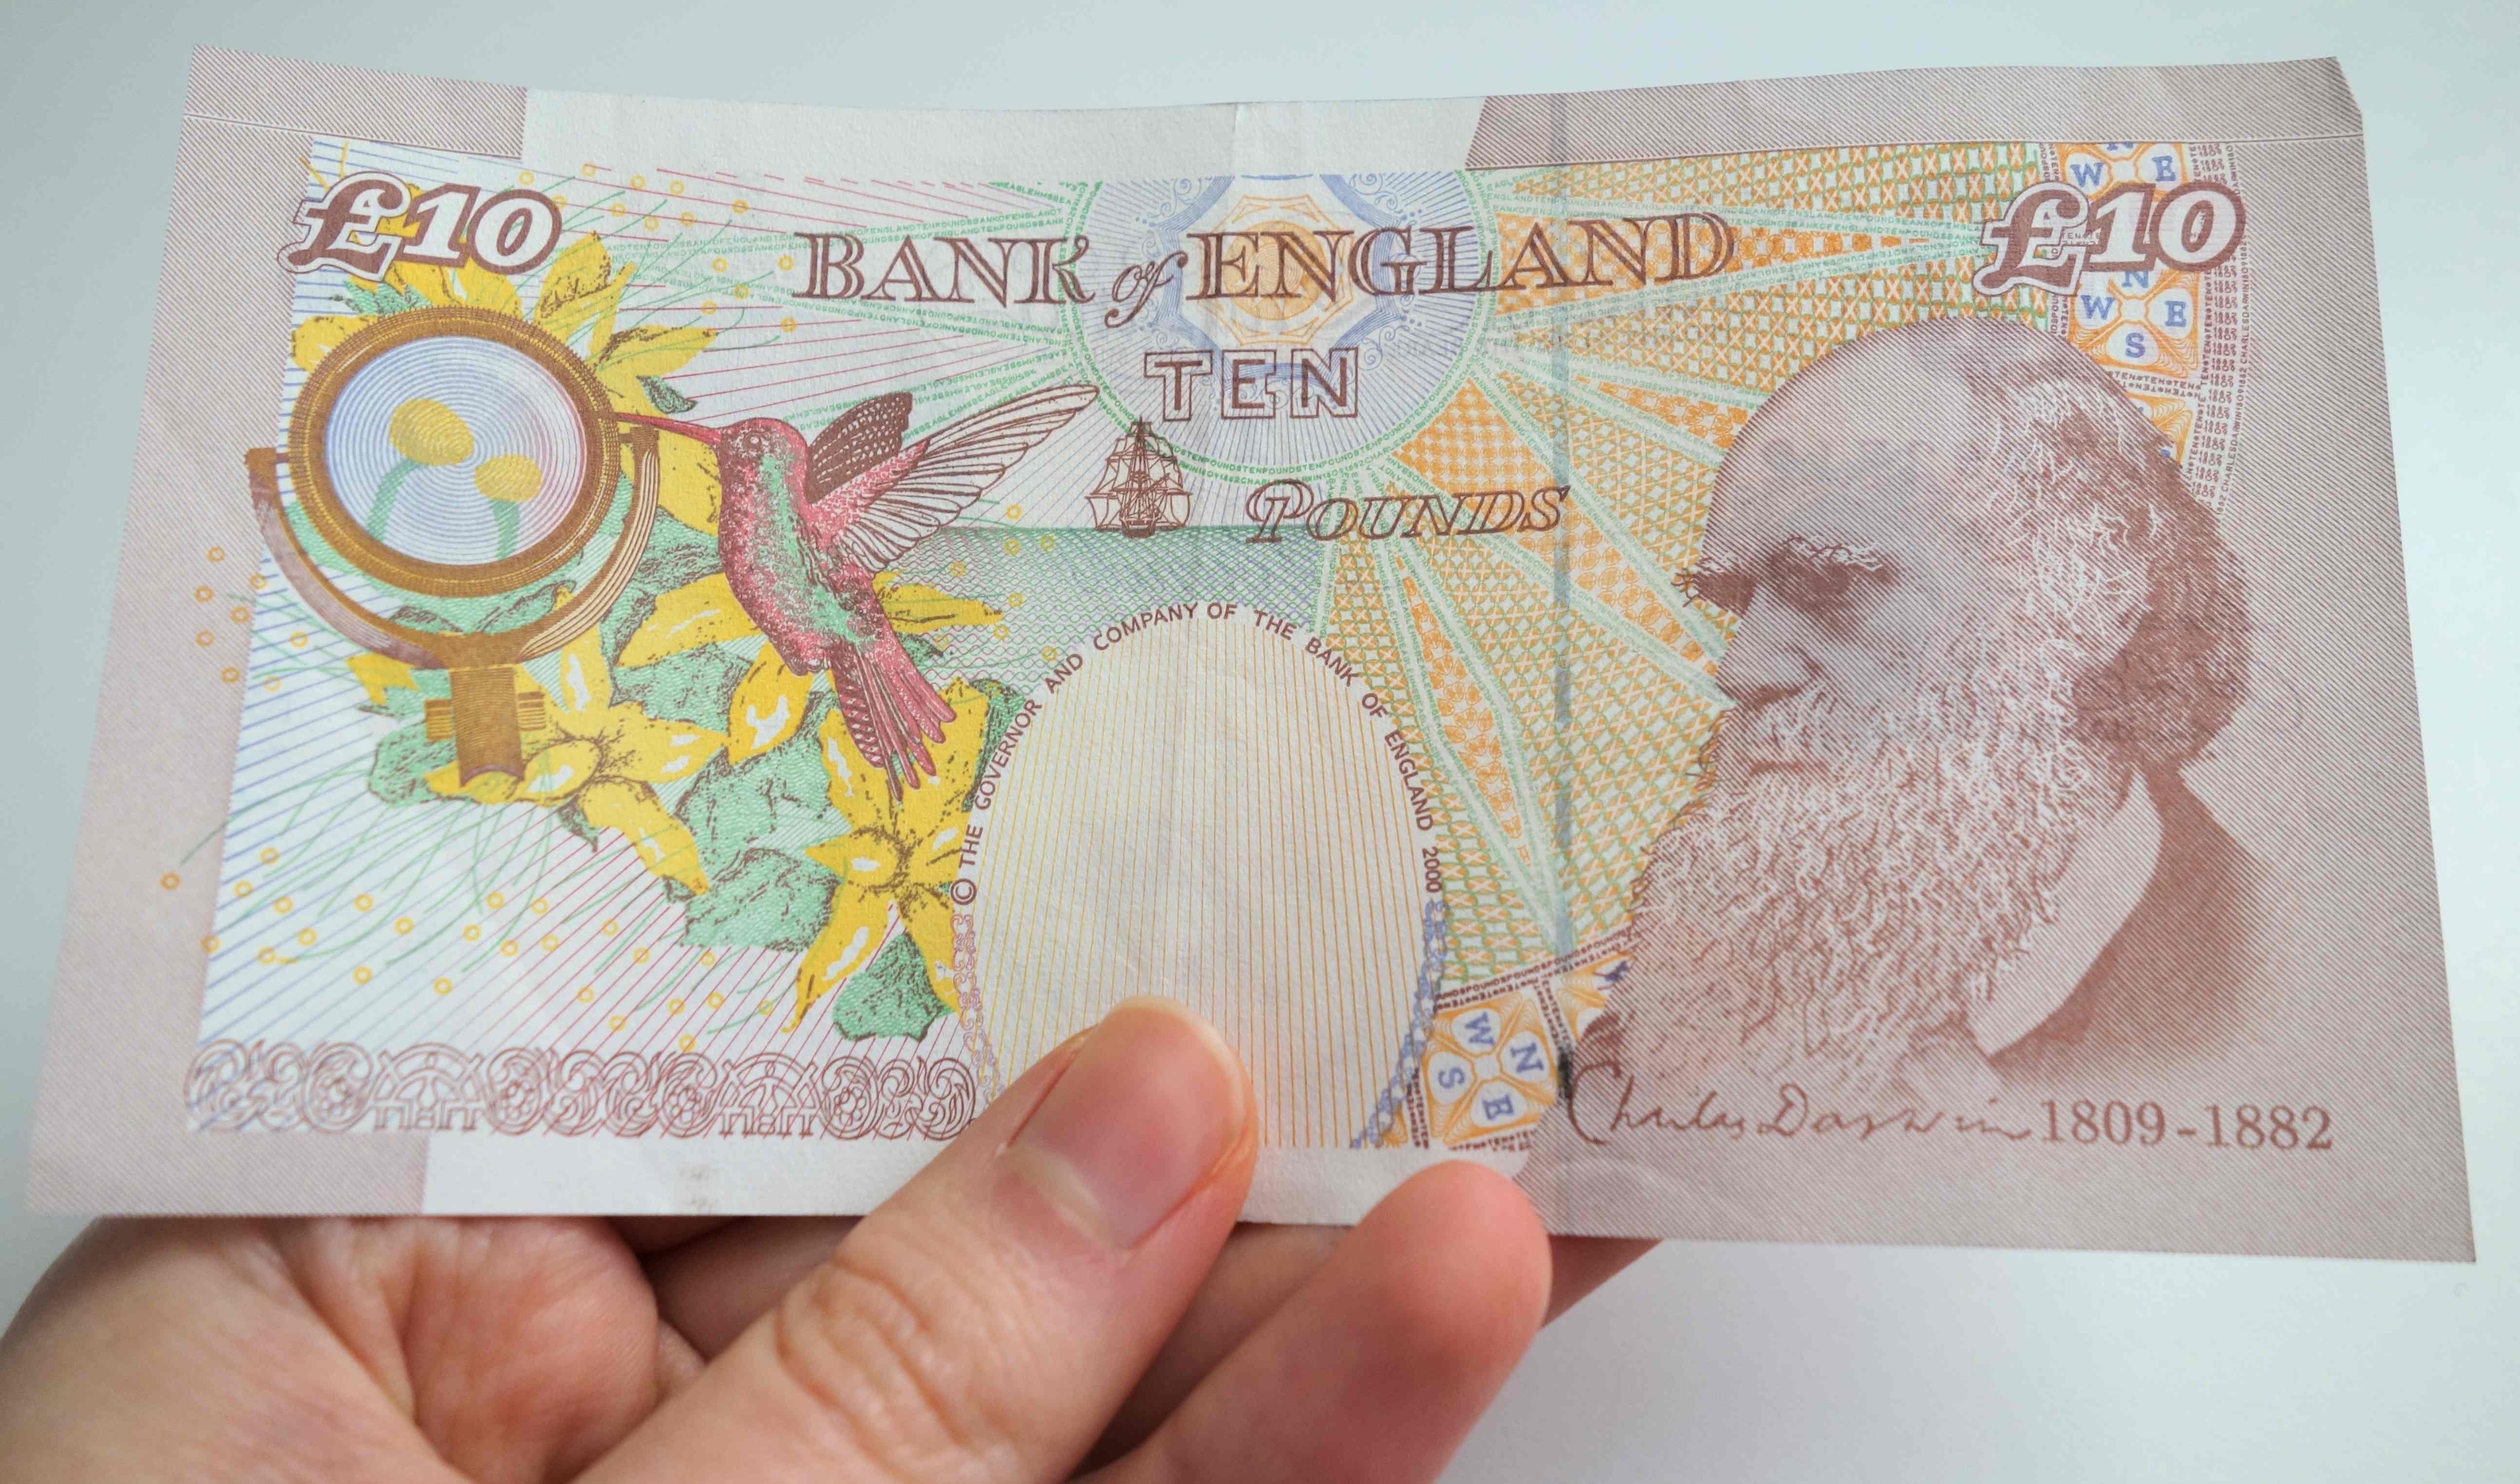 Bank of England tenner - ten 10 pound bank note featuring Charles Darwin - UK money banknote